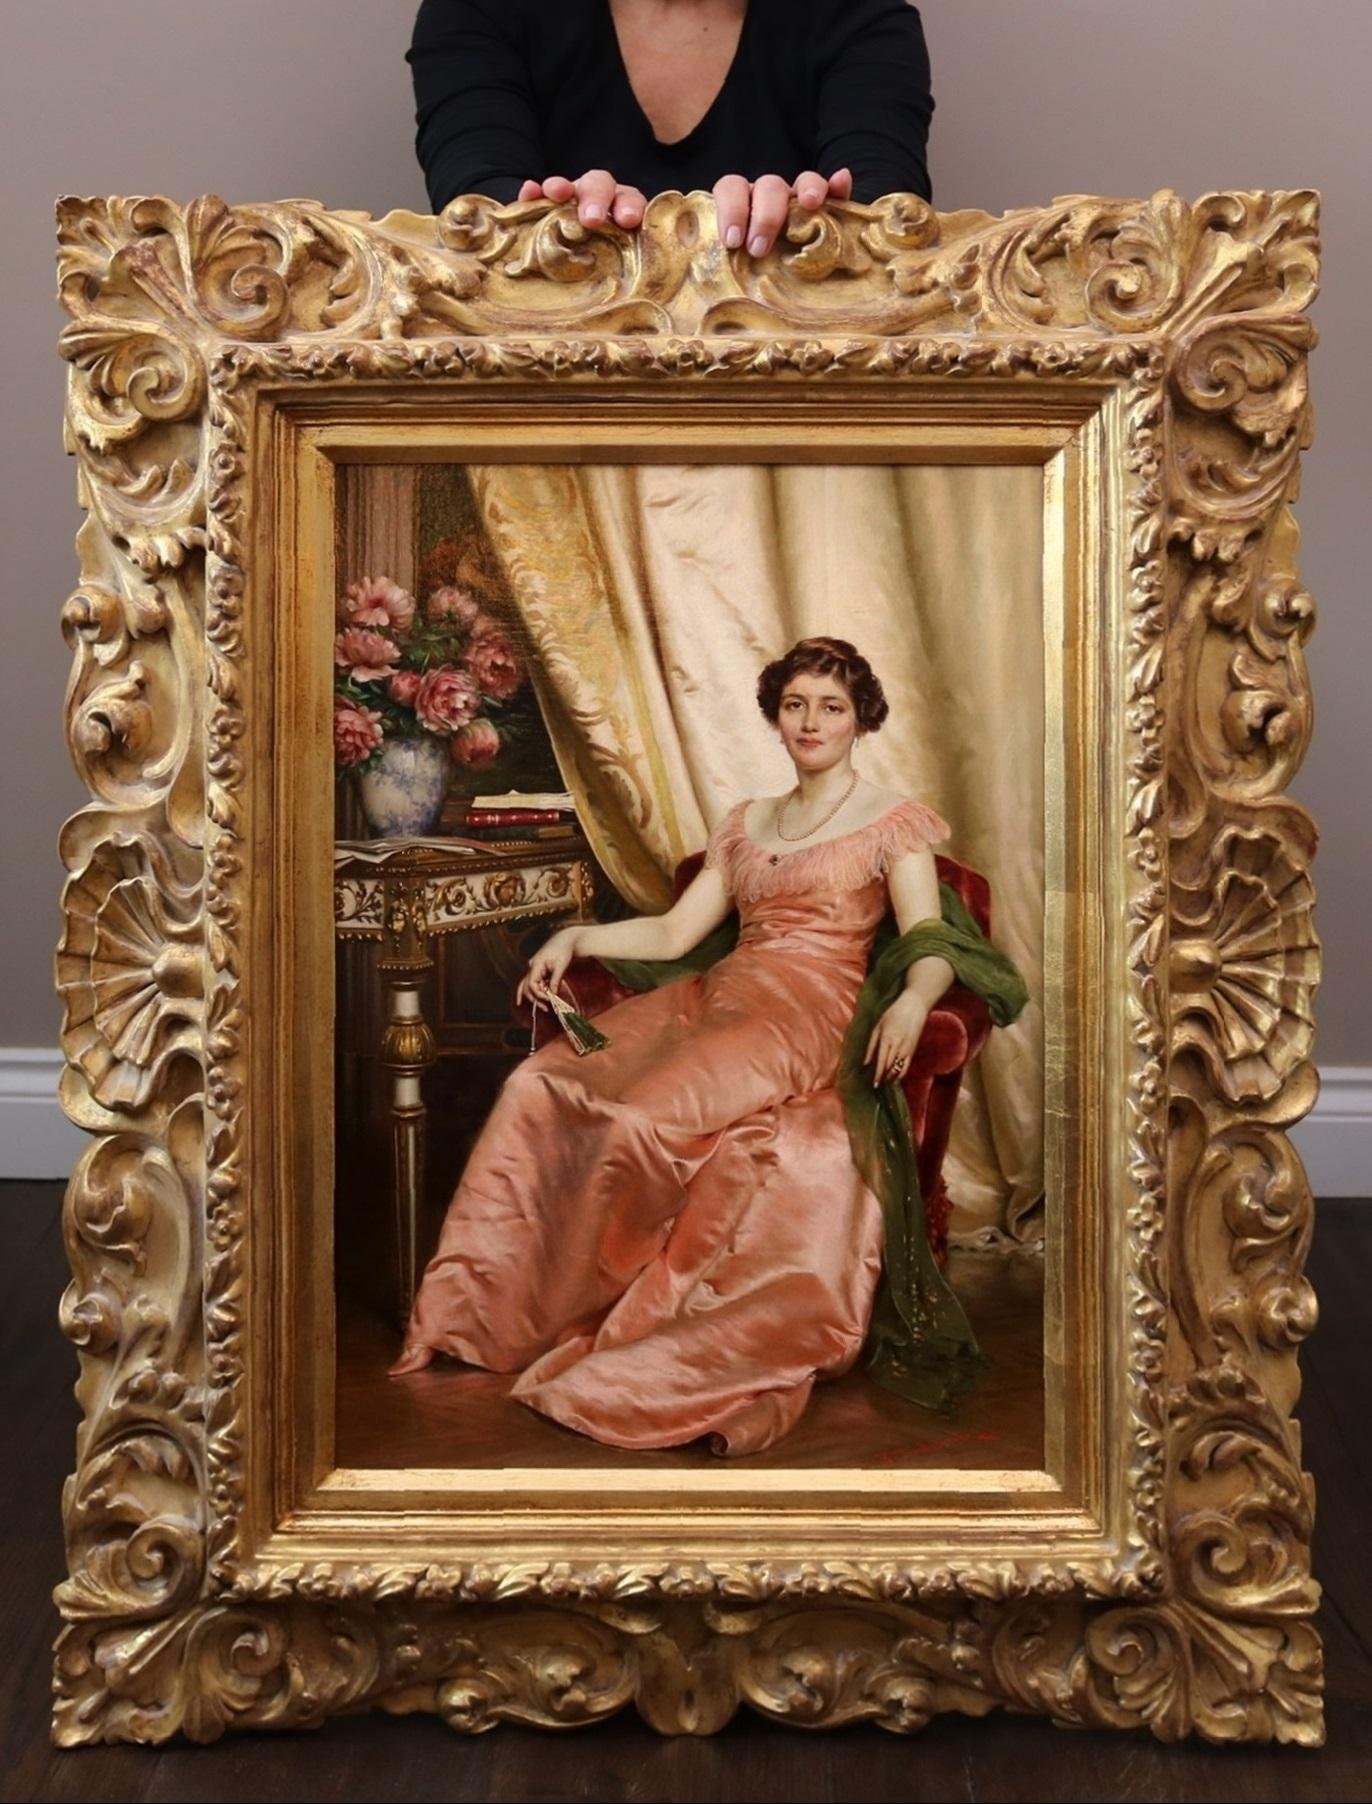 Frédéric Soulacroix Figurative Painting - Regina dei Fiori - 19th Century Society Oil Painting Portrait of Italian Beauty